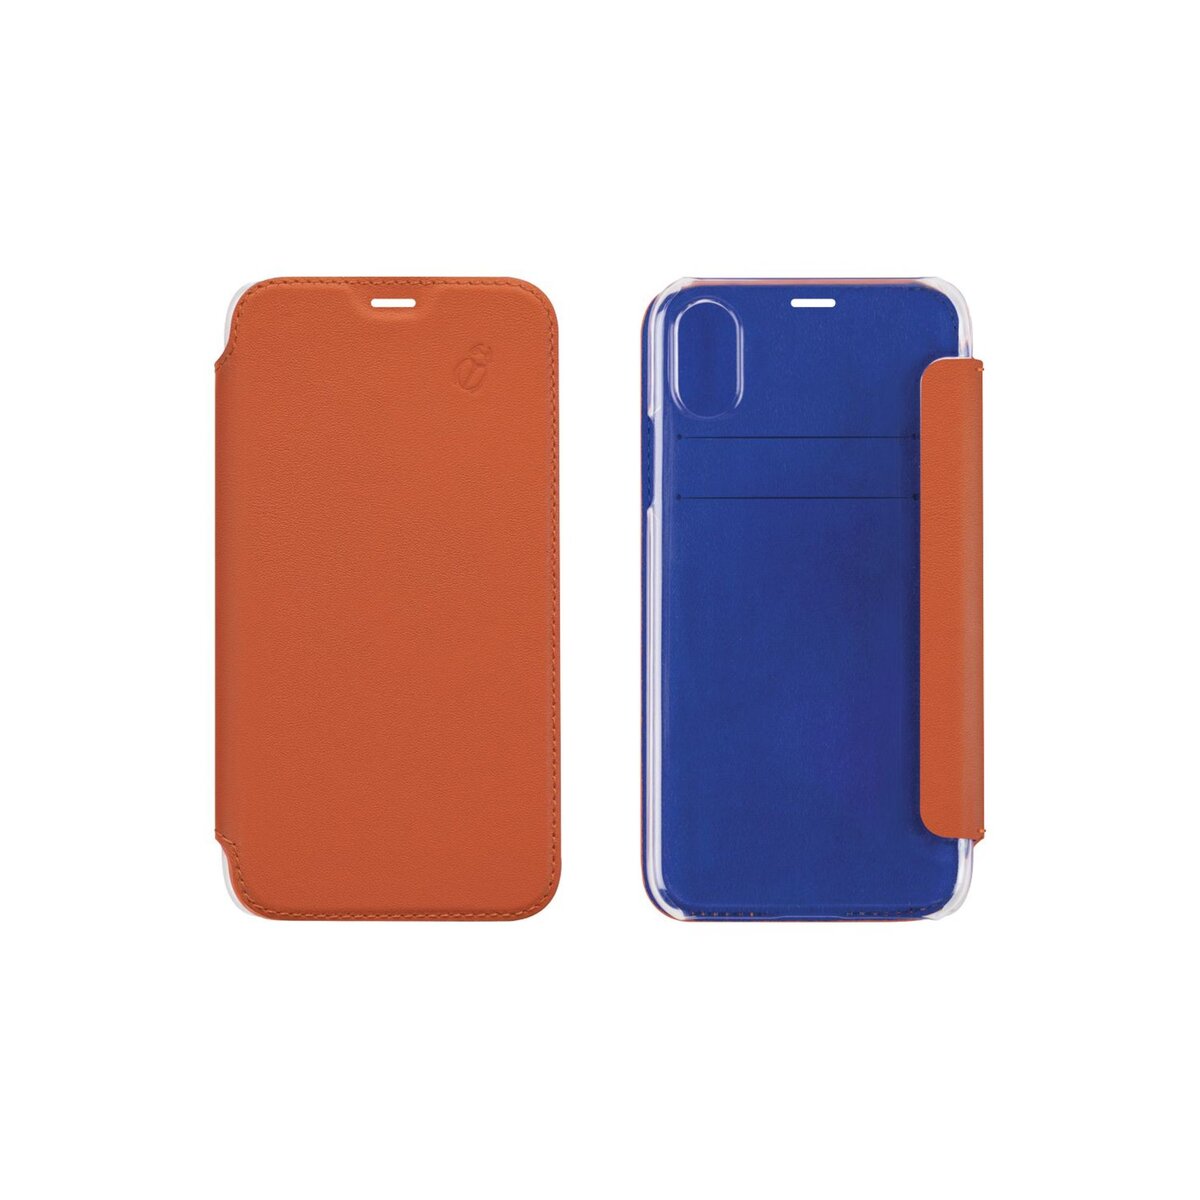 BEETLE CAS Etui folio pour iPhone 6/6S/7/8 - Orange et Bleu